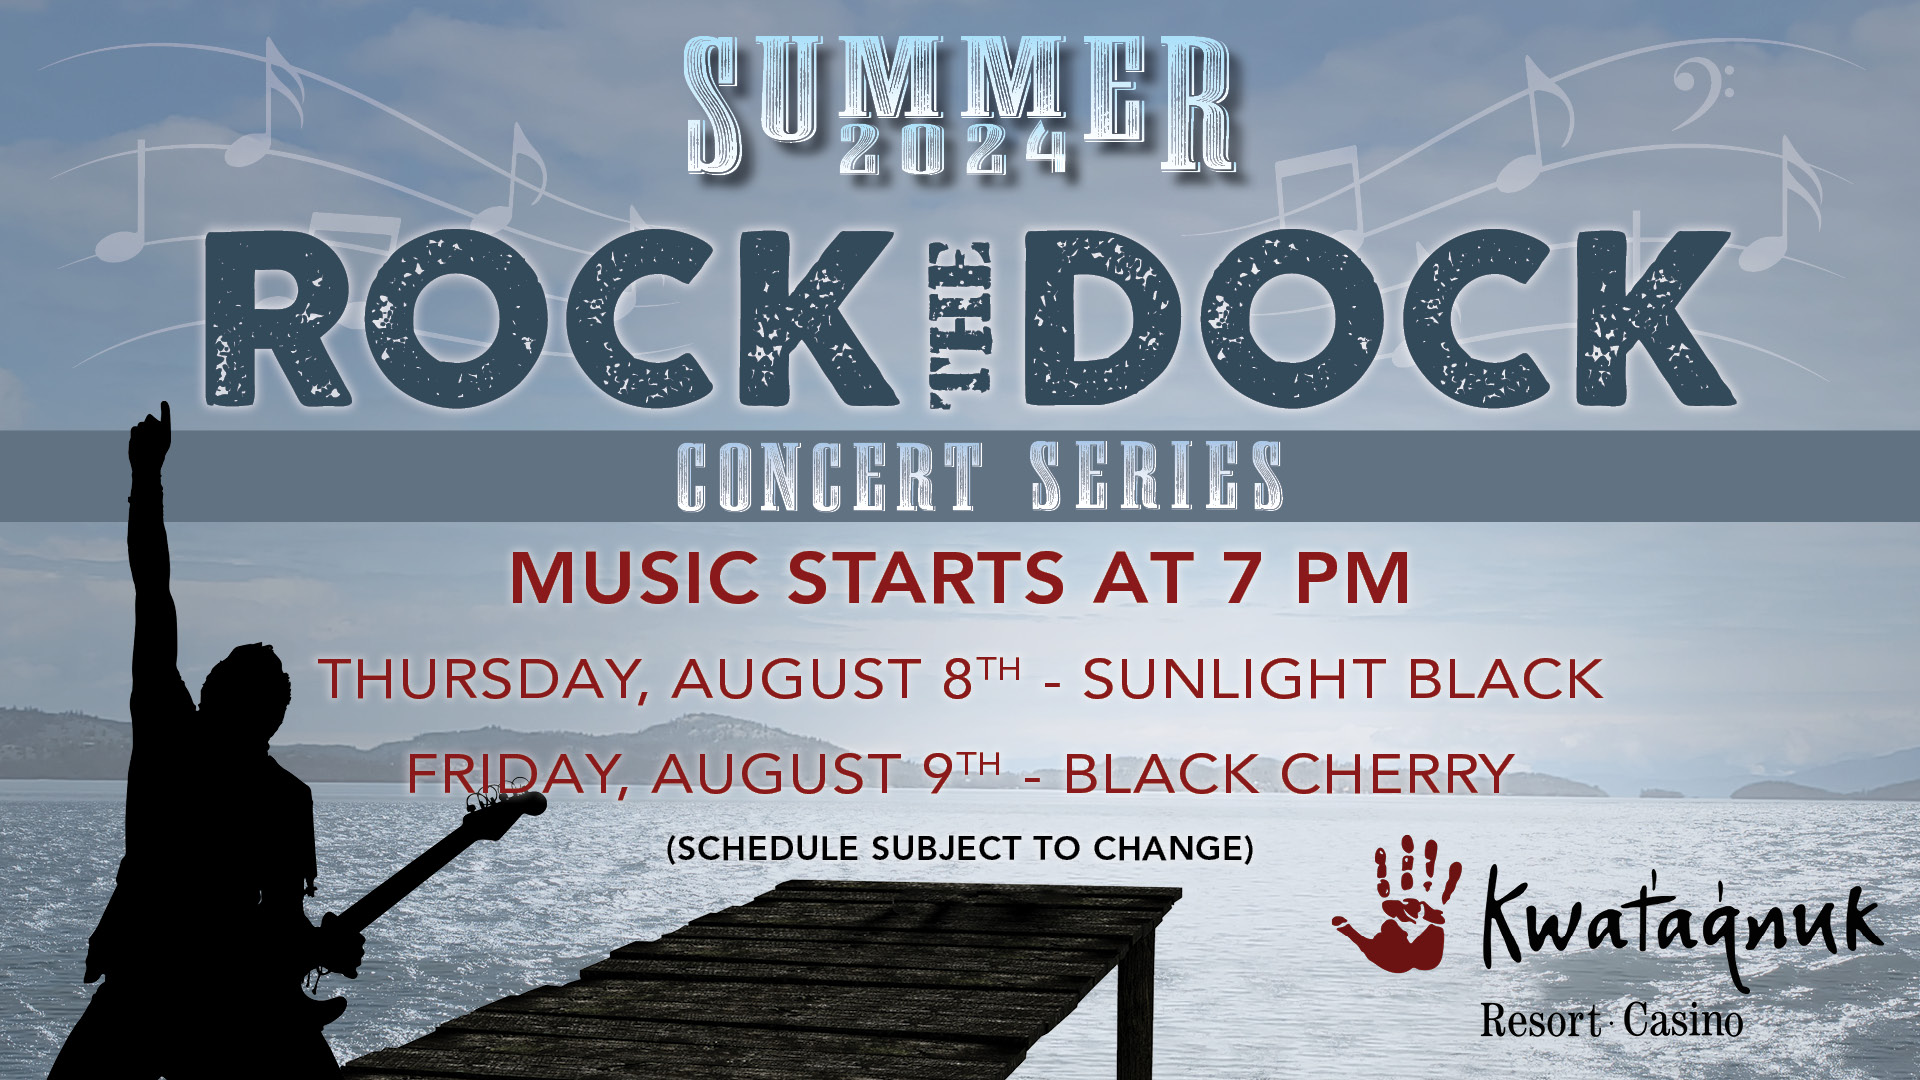 Rock the Dock, Kwataqnuk, Summer Concert Series, Summer Concert, Live music, free event, local event, free local event, Sunlight Black, Black Cherry, Rockin the dock rock the docks,